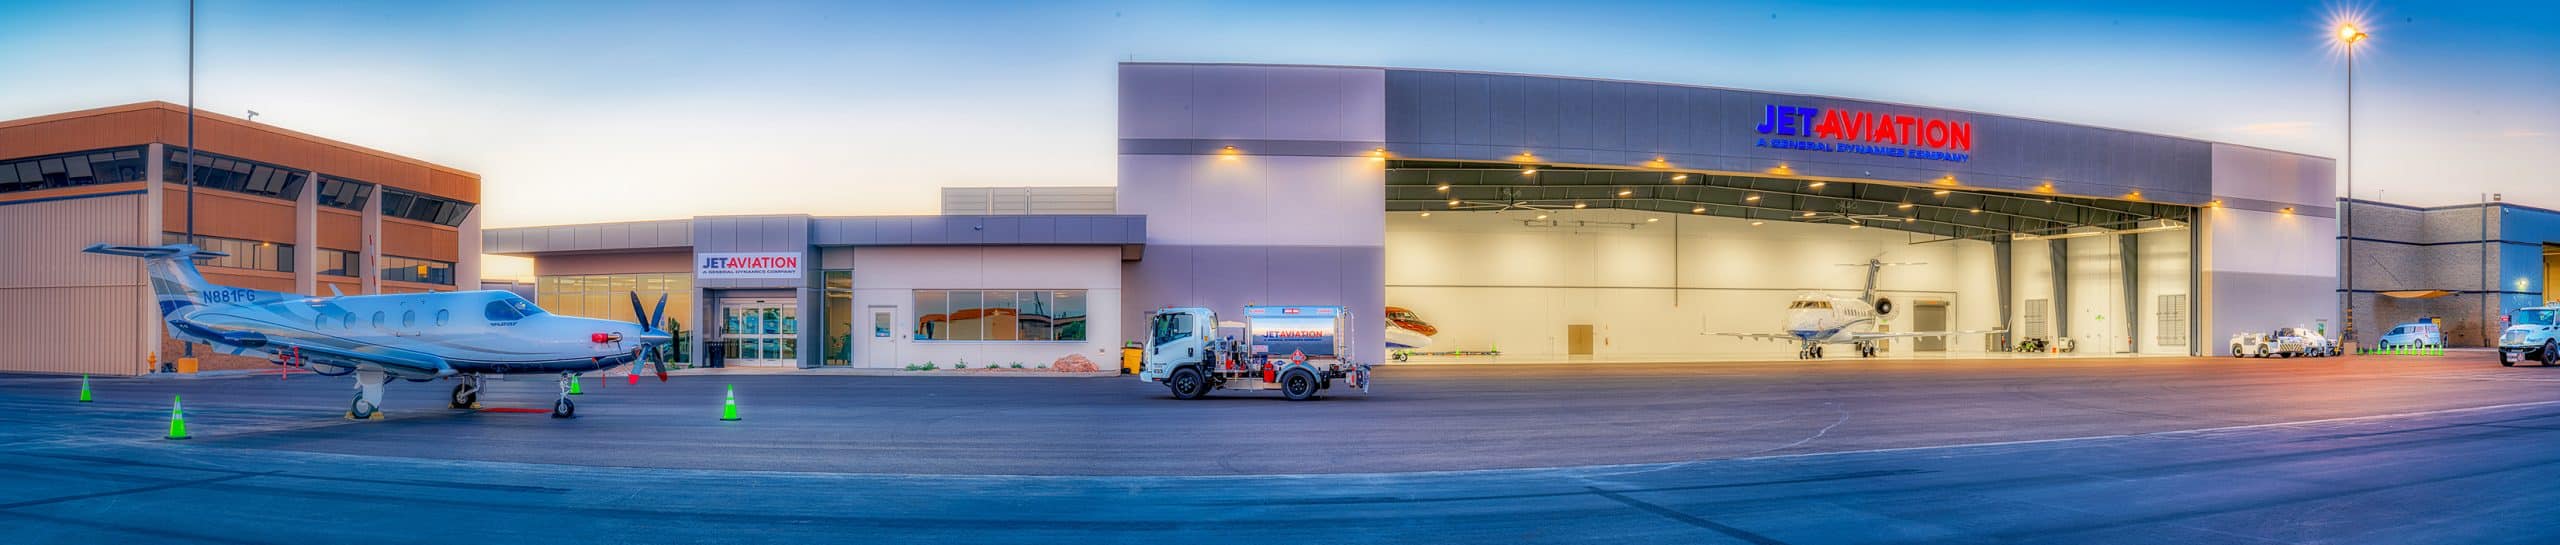 Jet Aviation – Scottsdale hangar